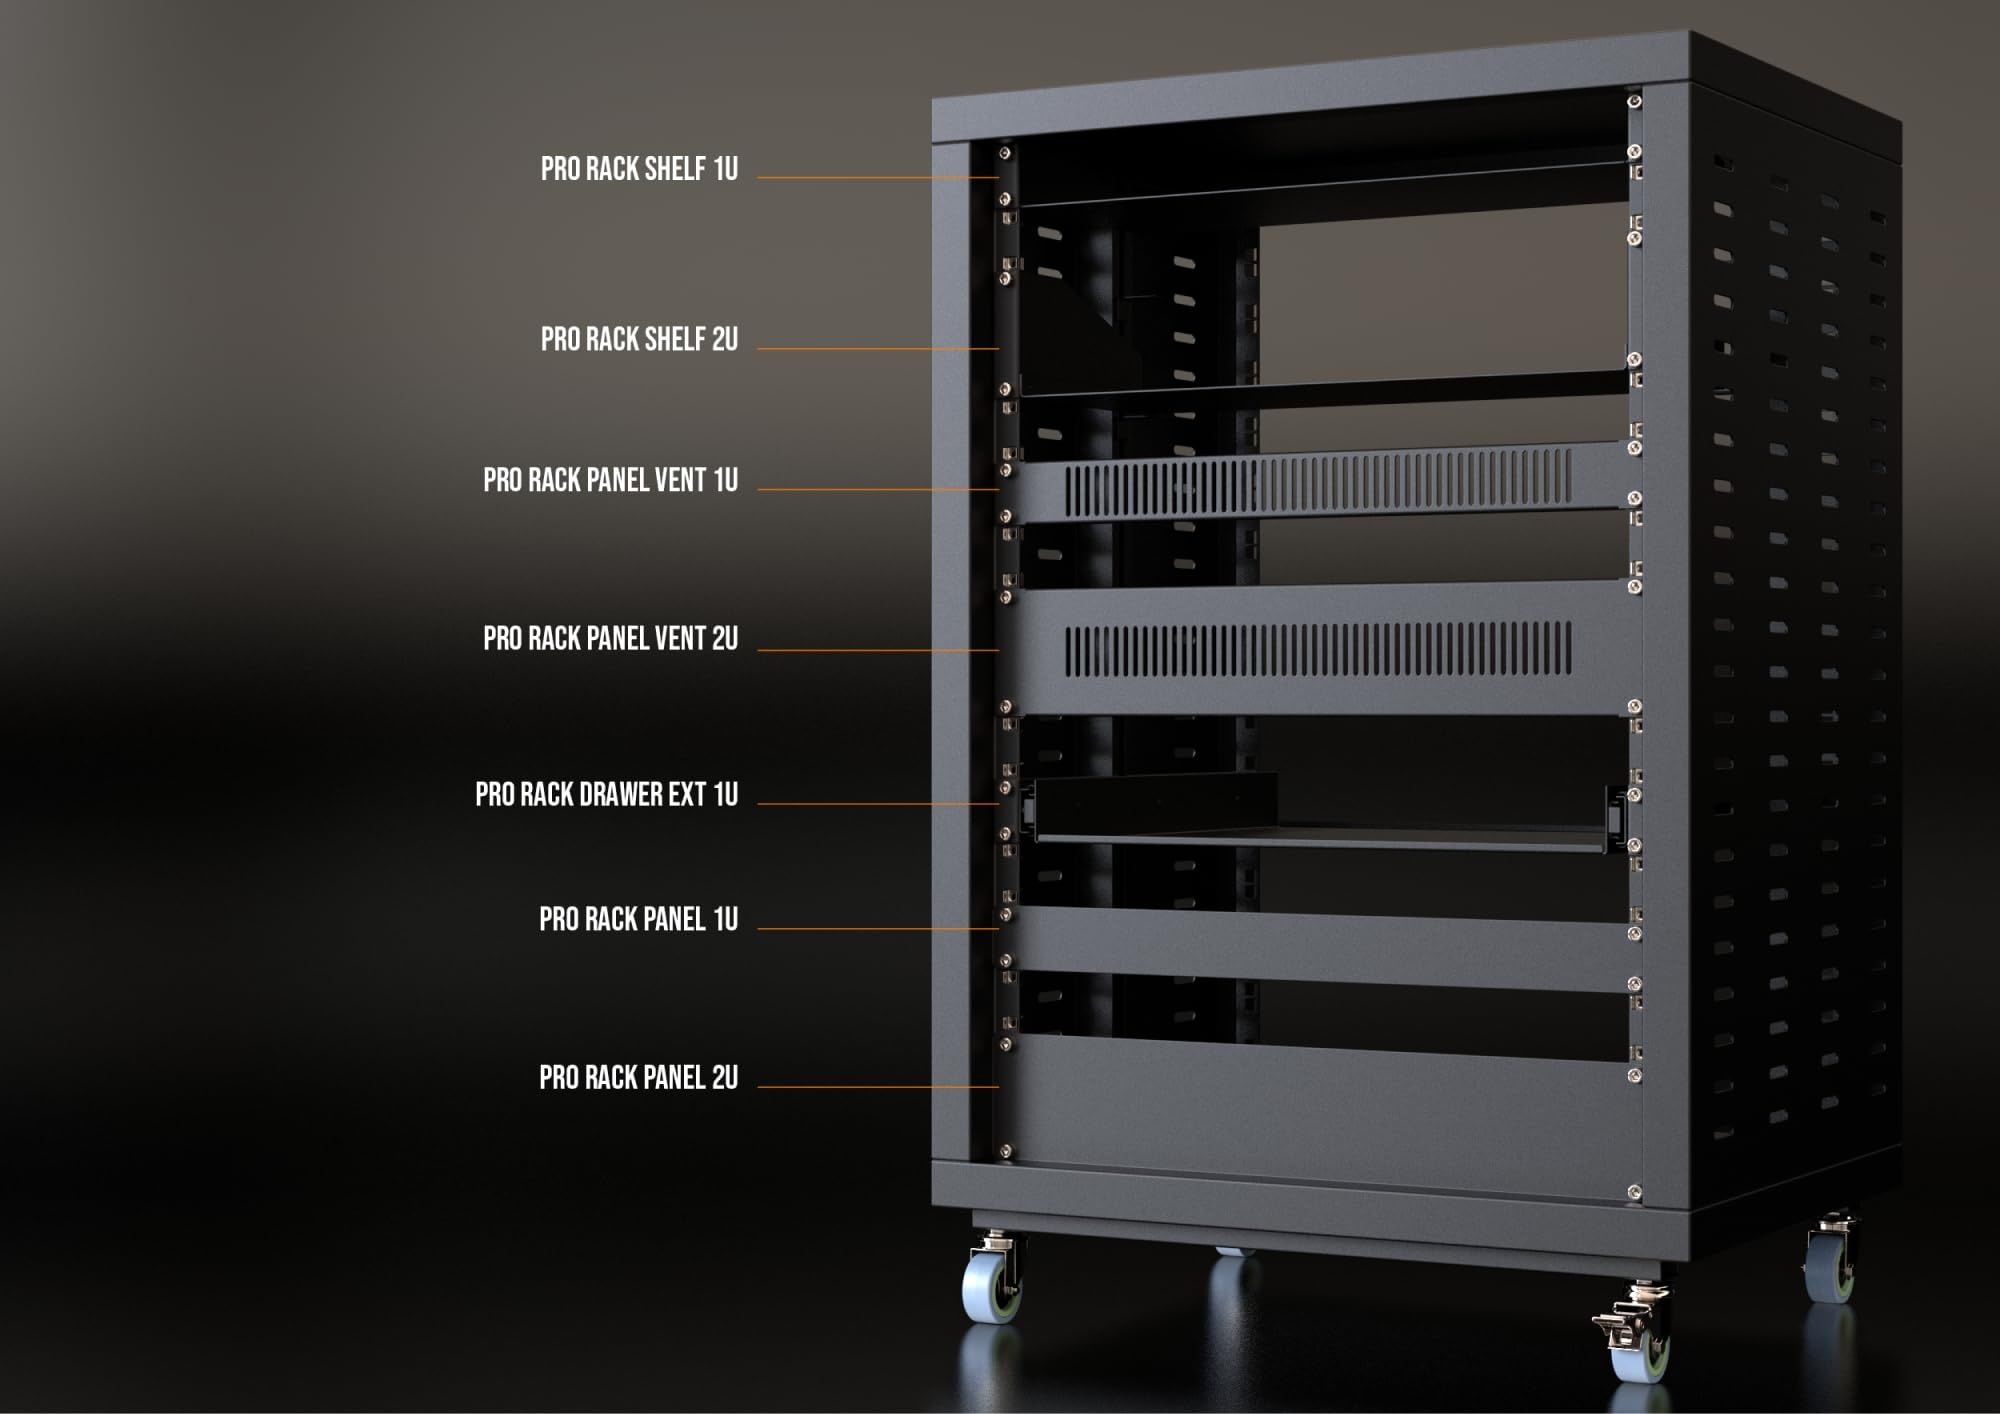 Audibax Pro Rack Shelf 2U podajnik półki